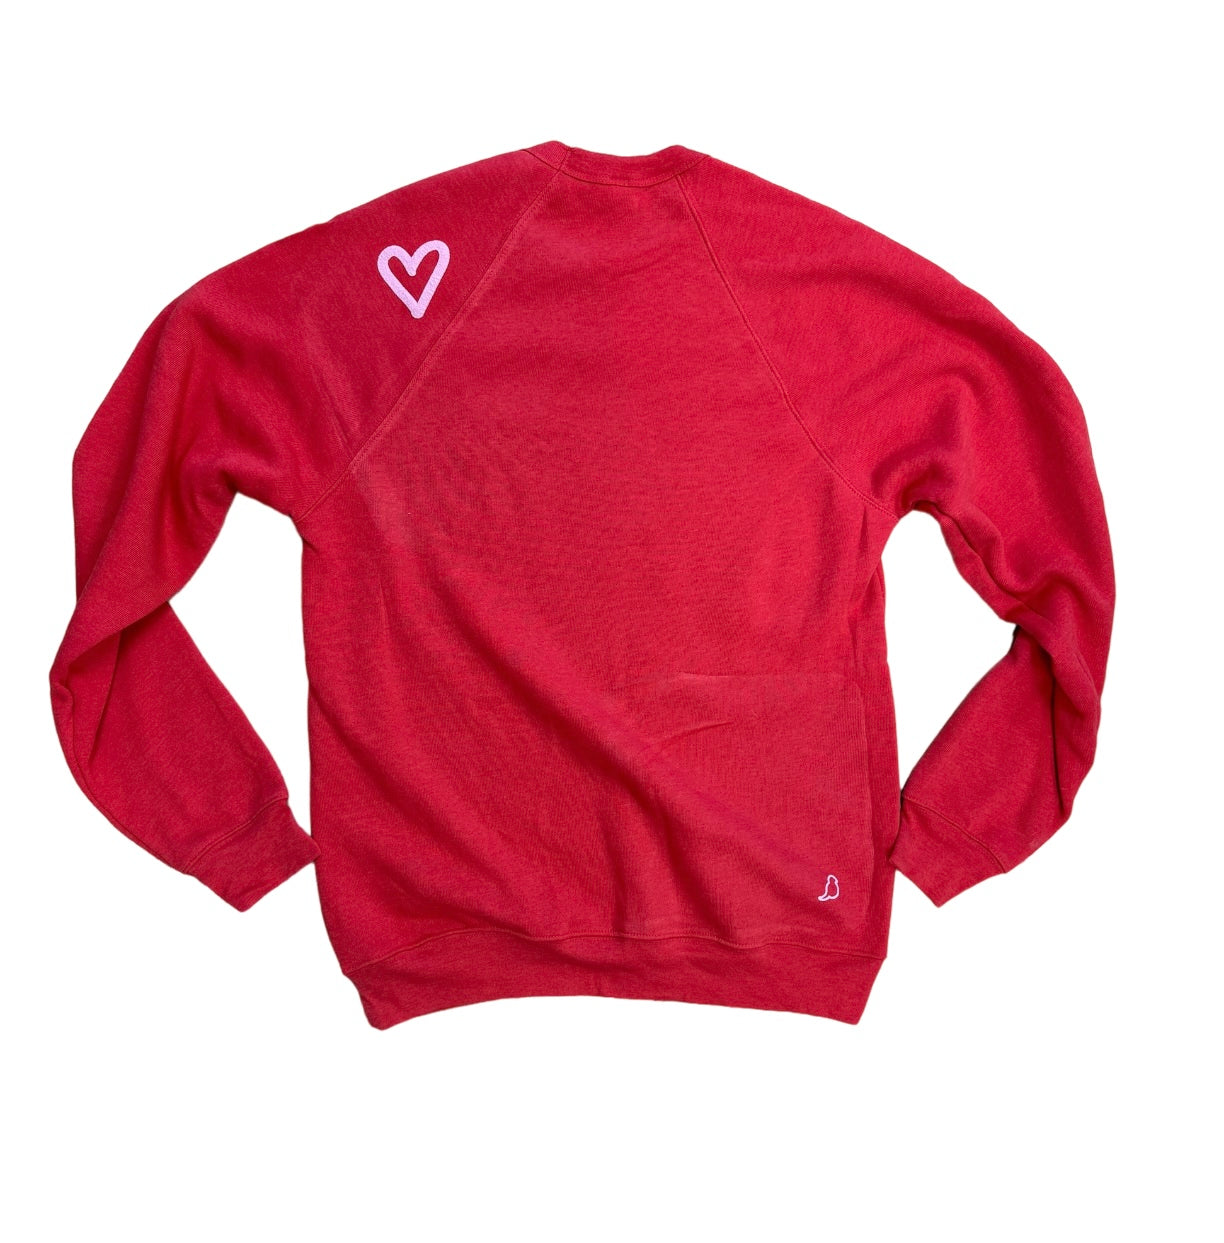 Follow Your Heart Sweatshirt - Heather Red